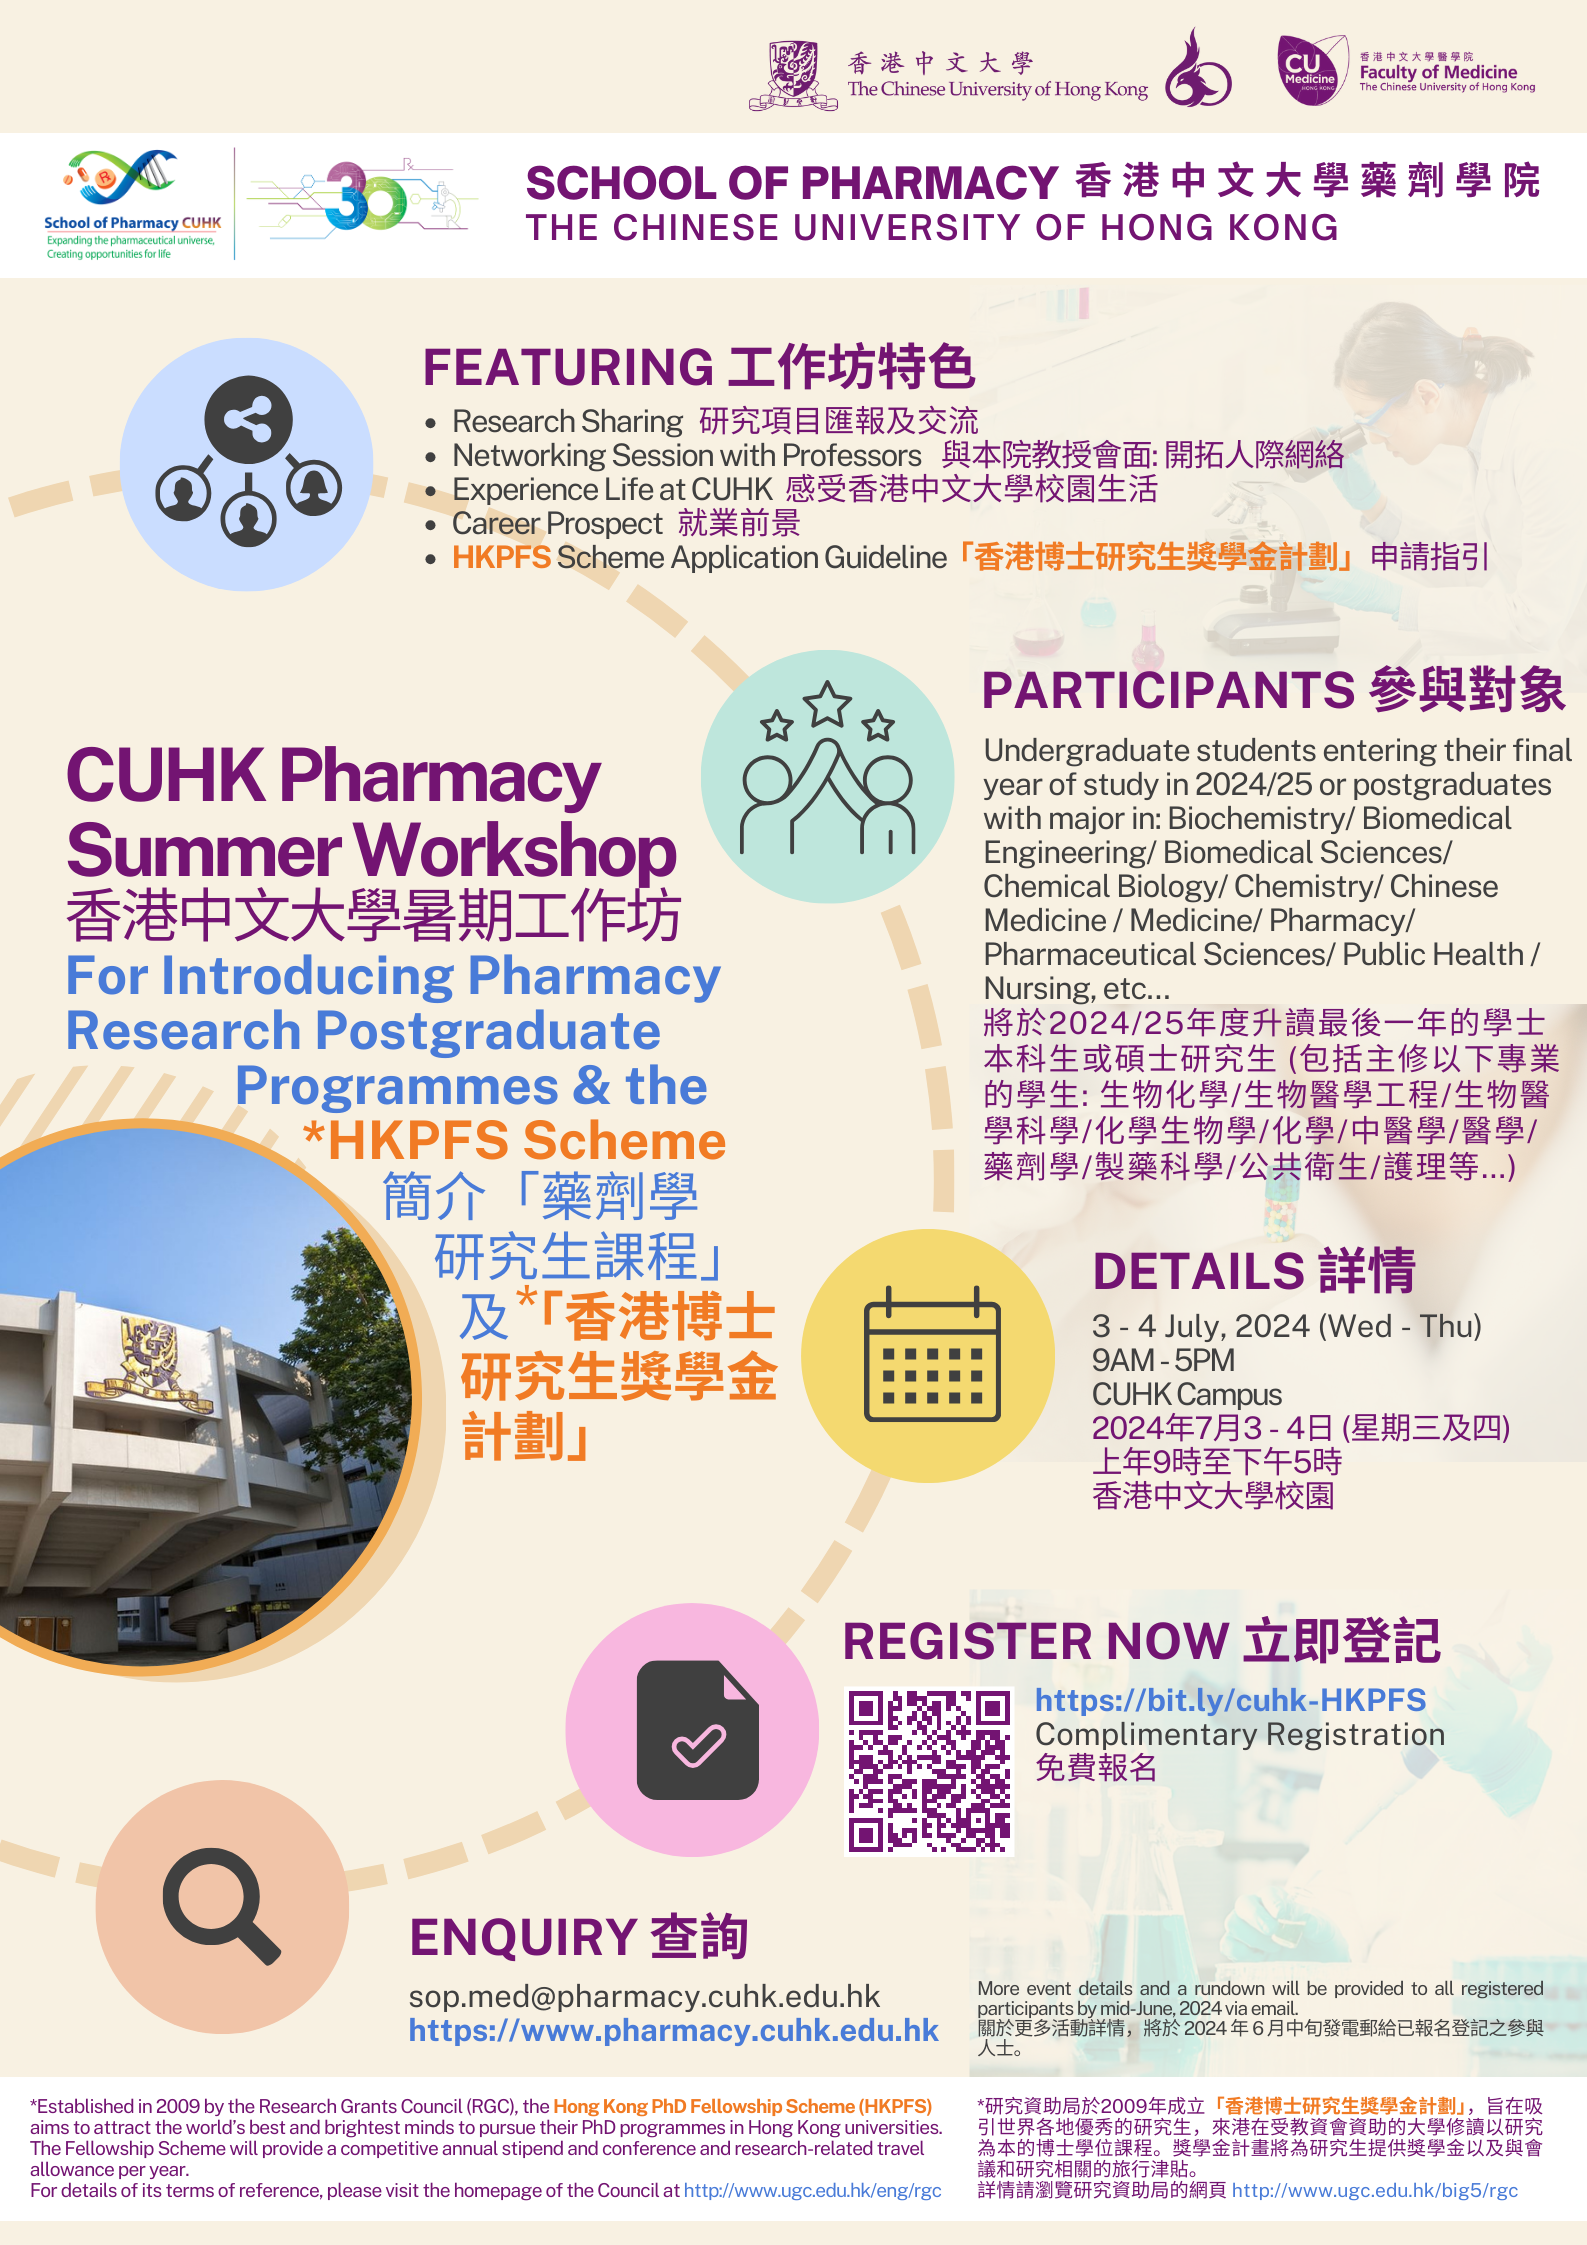 CUHK PHARMACY – Summer Workshop 2024 for Introducing Pharmacy Research Postgraduate Programmes & HKPFS Scheme